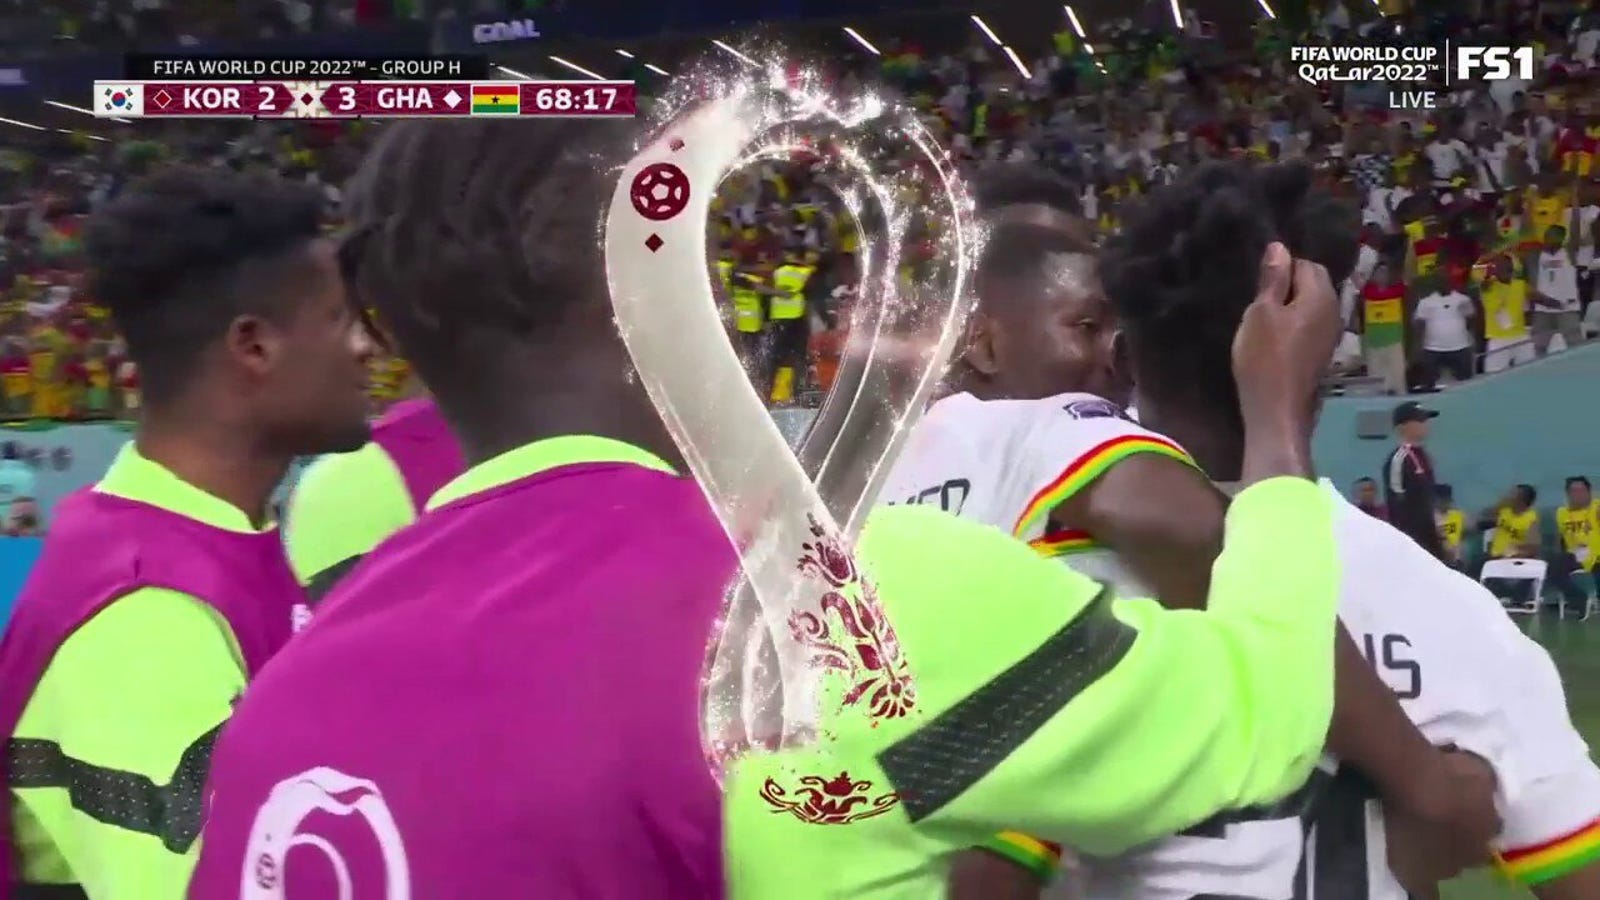 El ghanés Mohamed Kudus marca un gol contra la República de Corea en el minuto 68 |  copa del mundo 2022